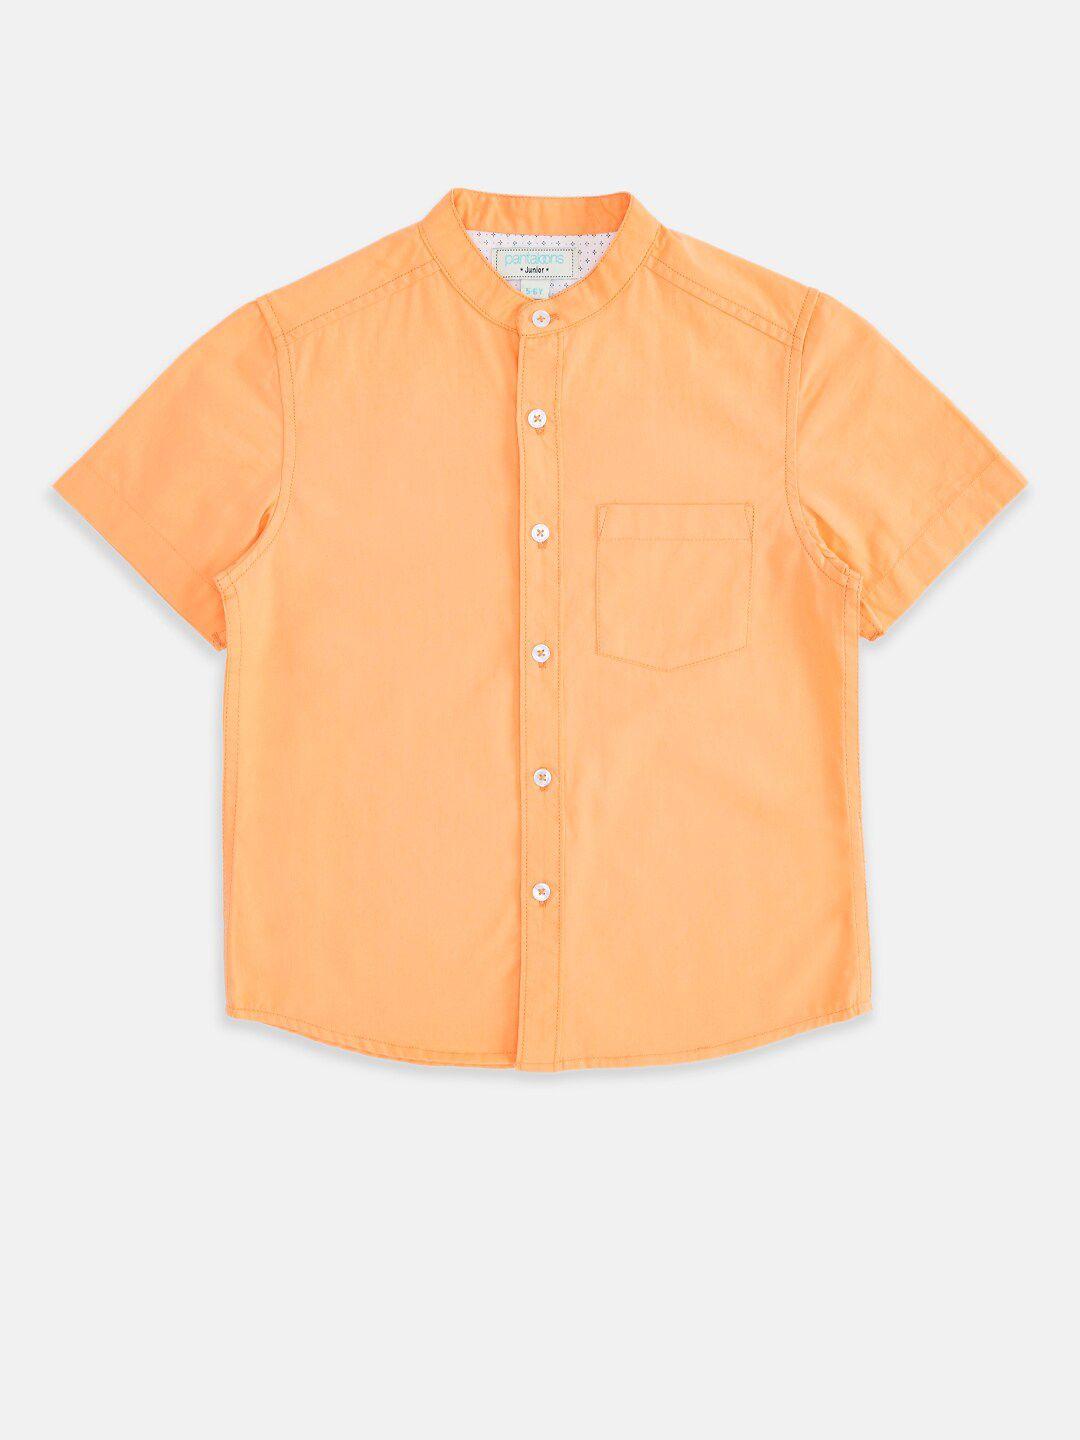 pantaloons junior boys peach-coloured solid casual cotton shirt